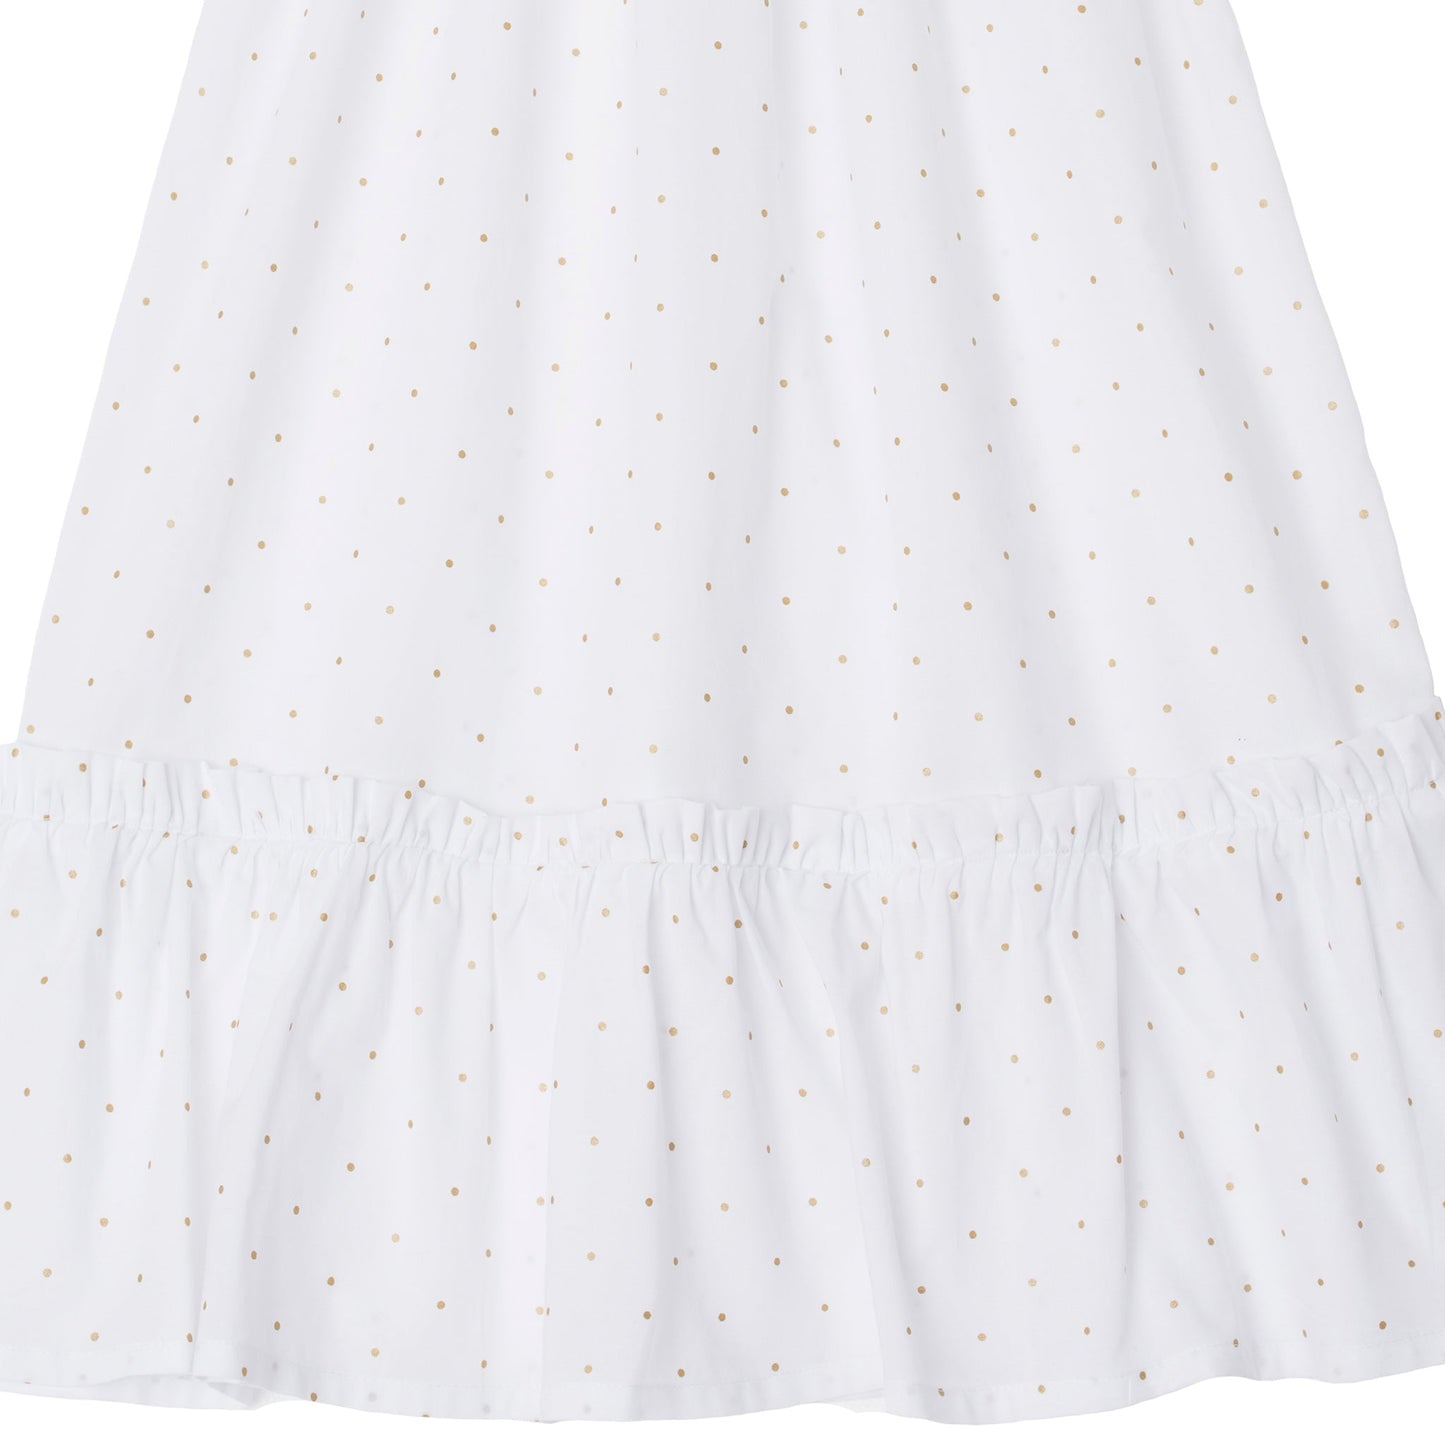 Nightdress White polka-dots